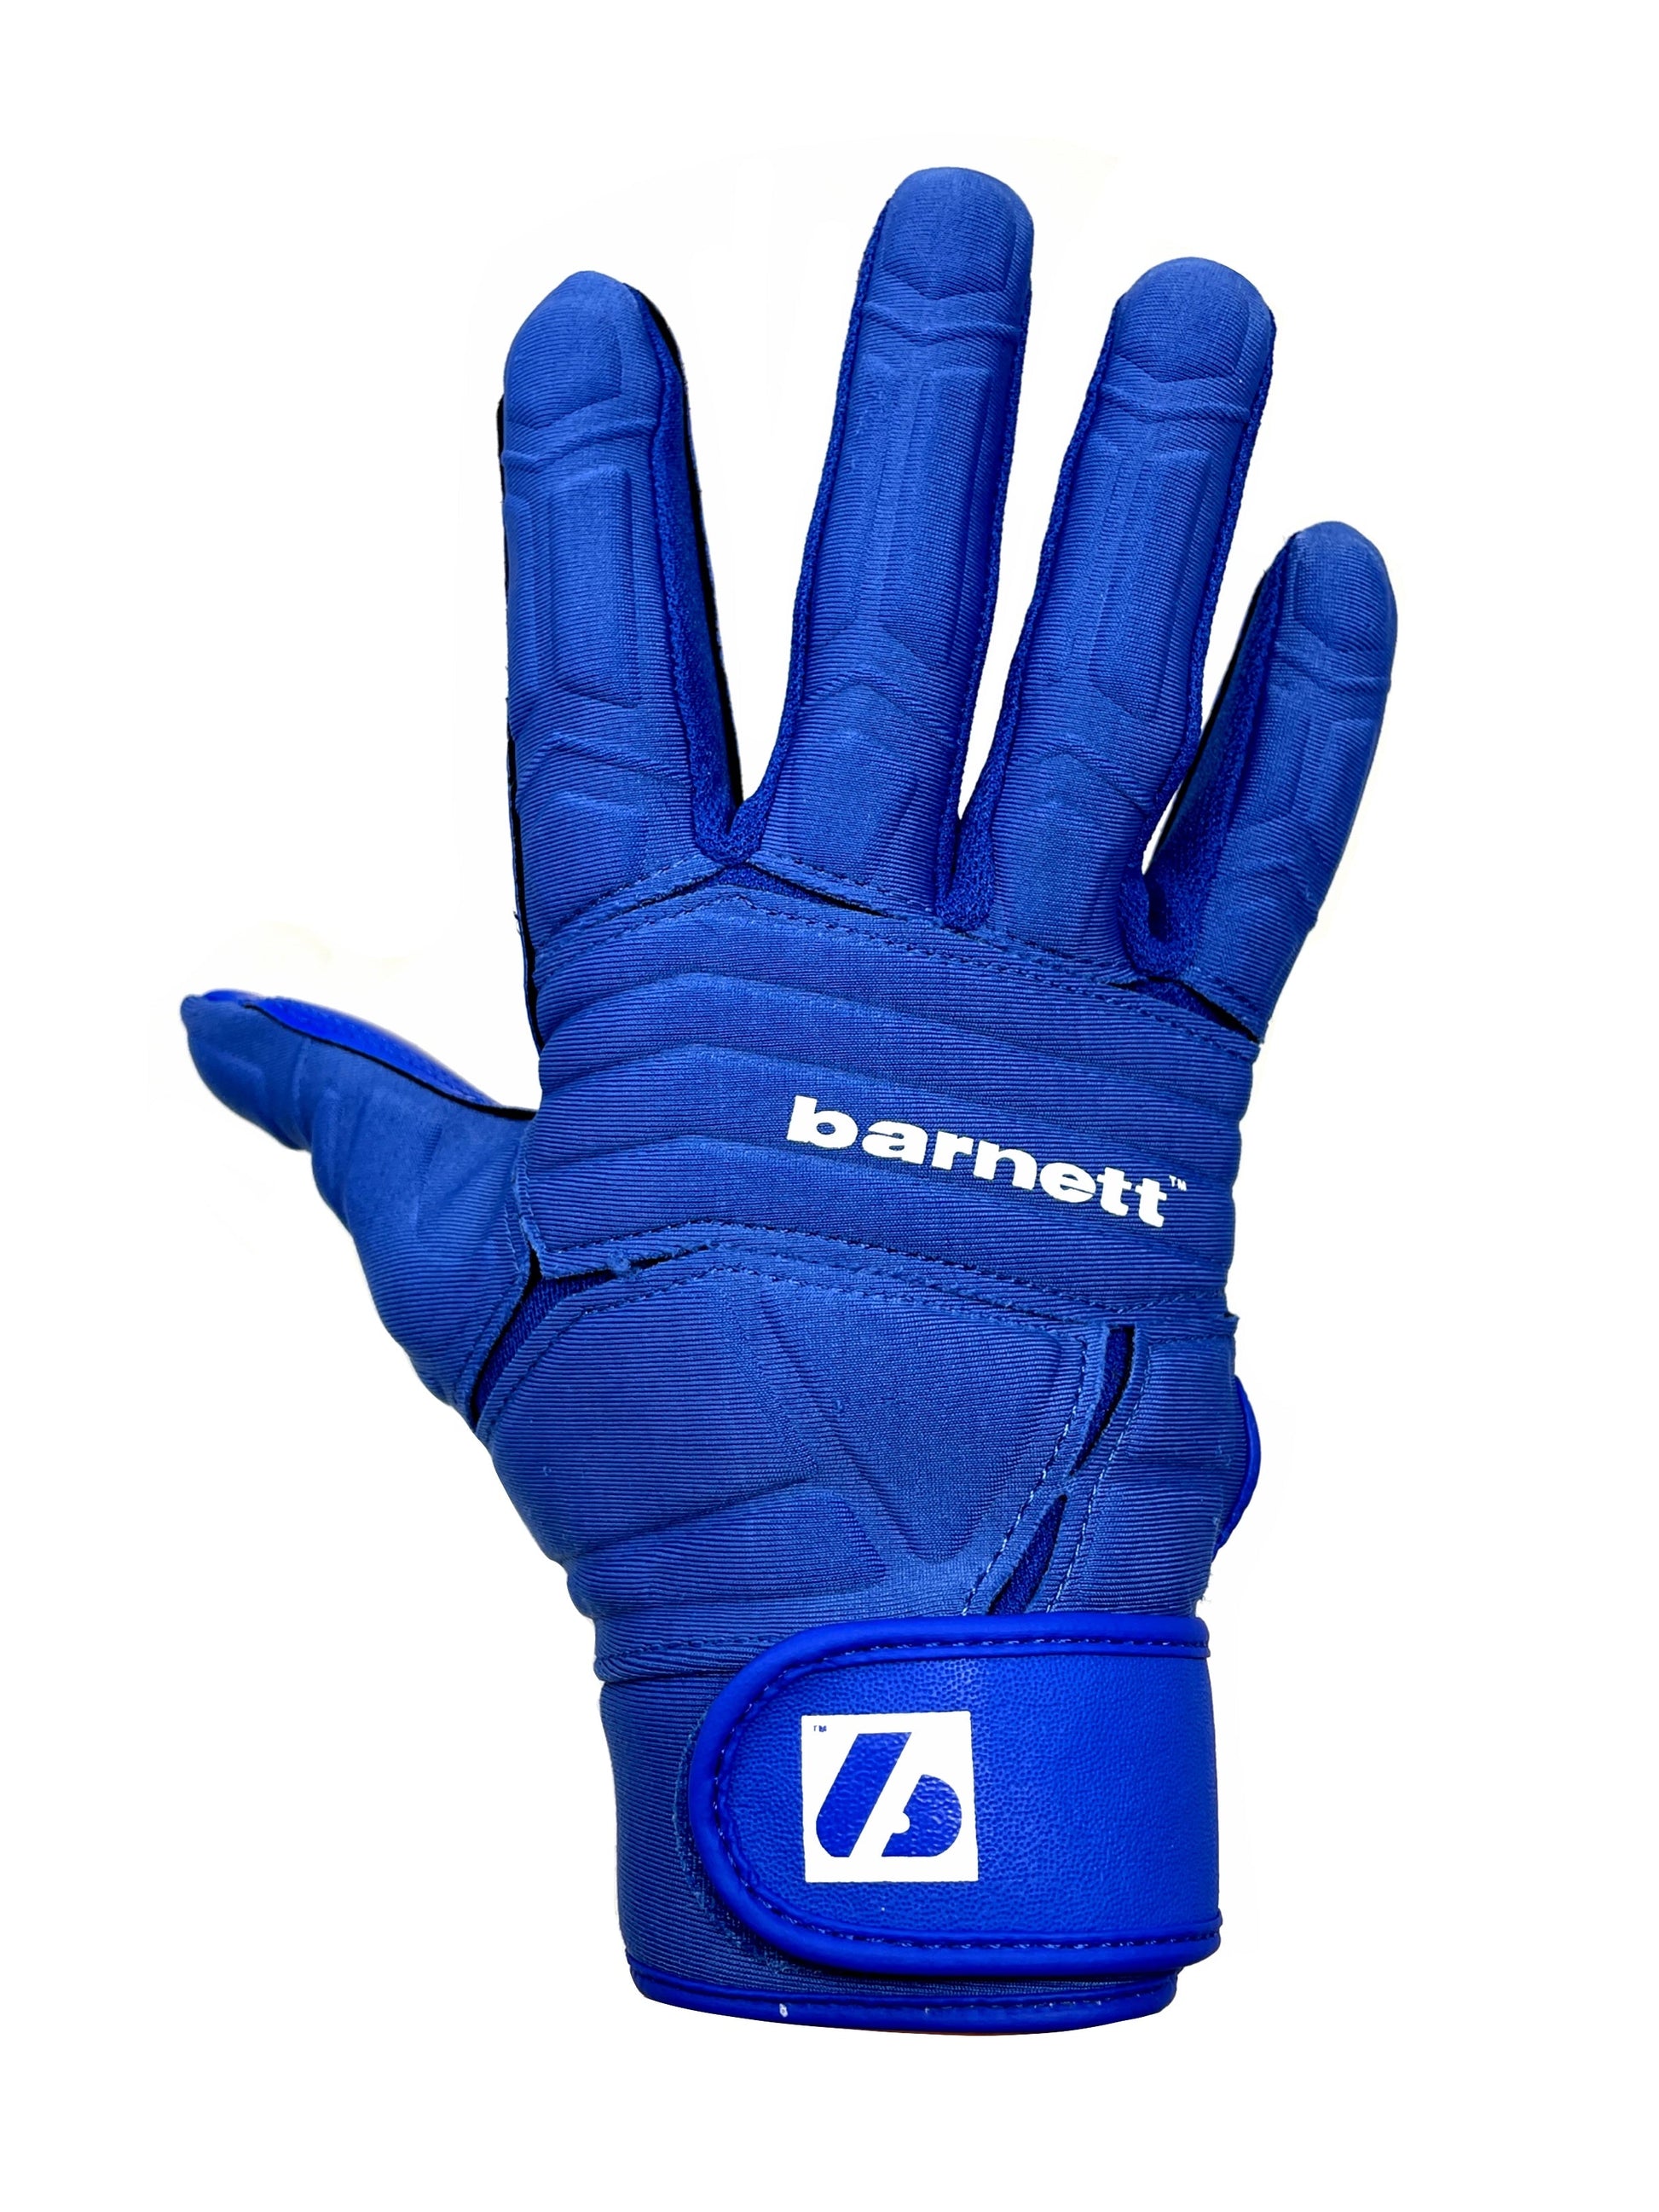 FLG-03 guantes de fútbol americano pro linemen, OL,DL, azul – barnettspain